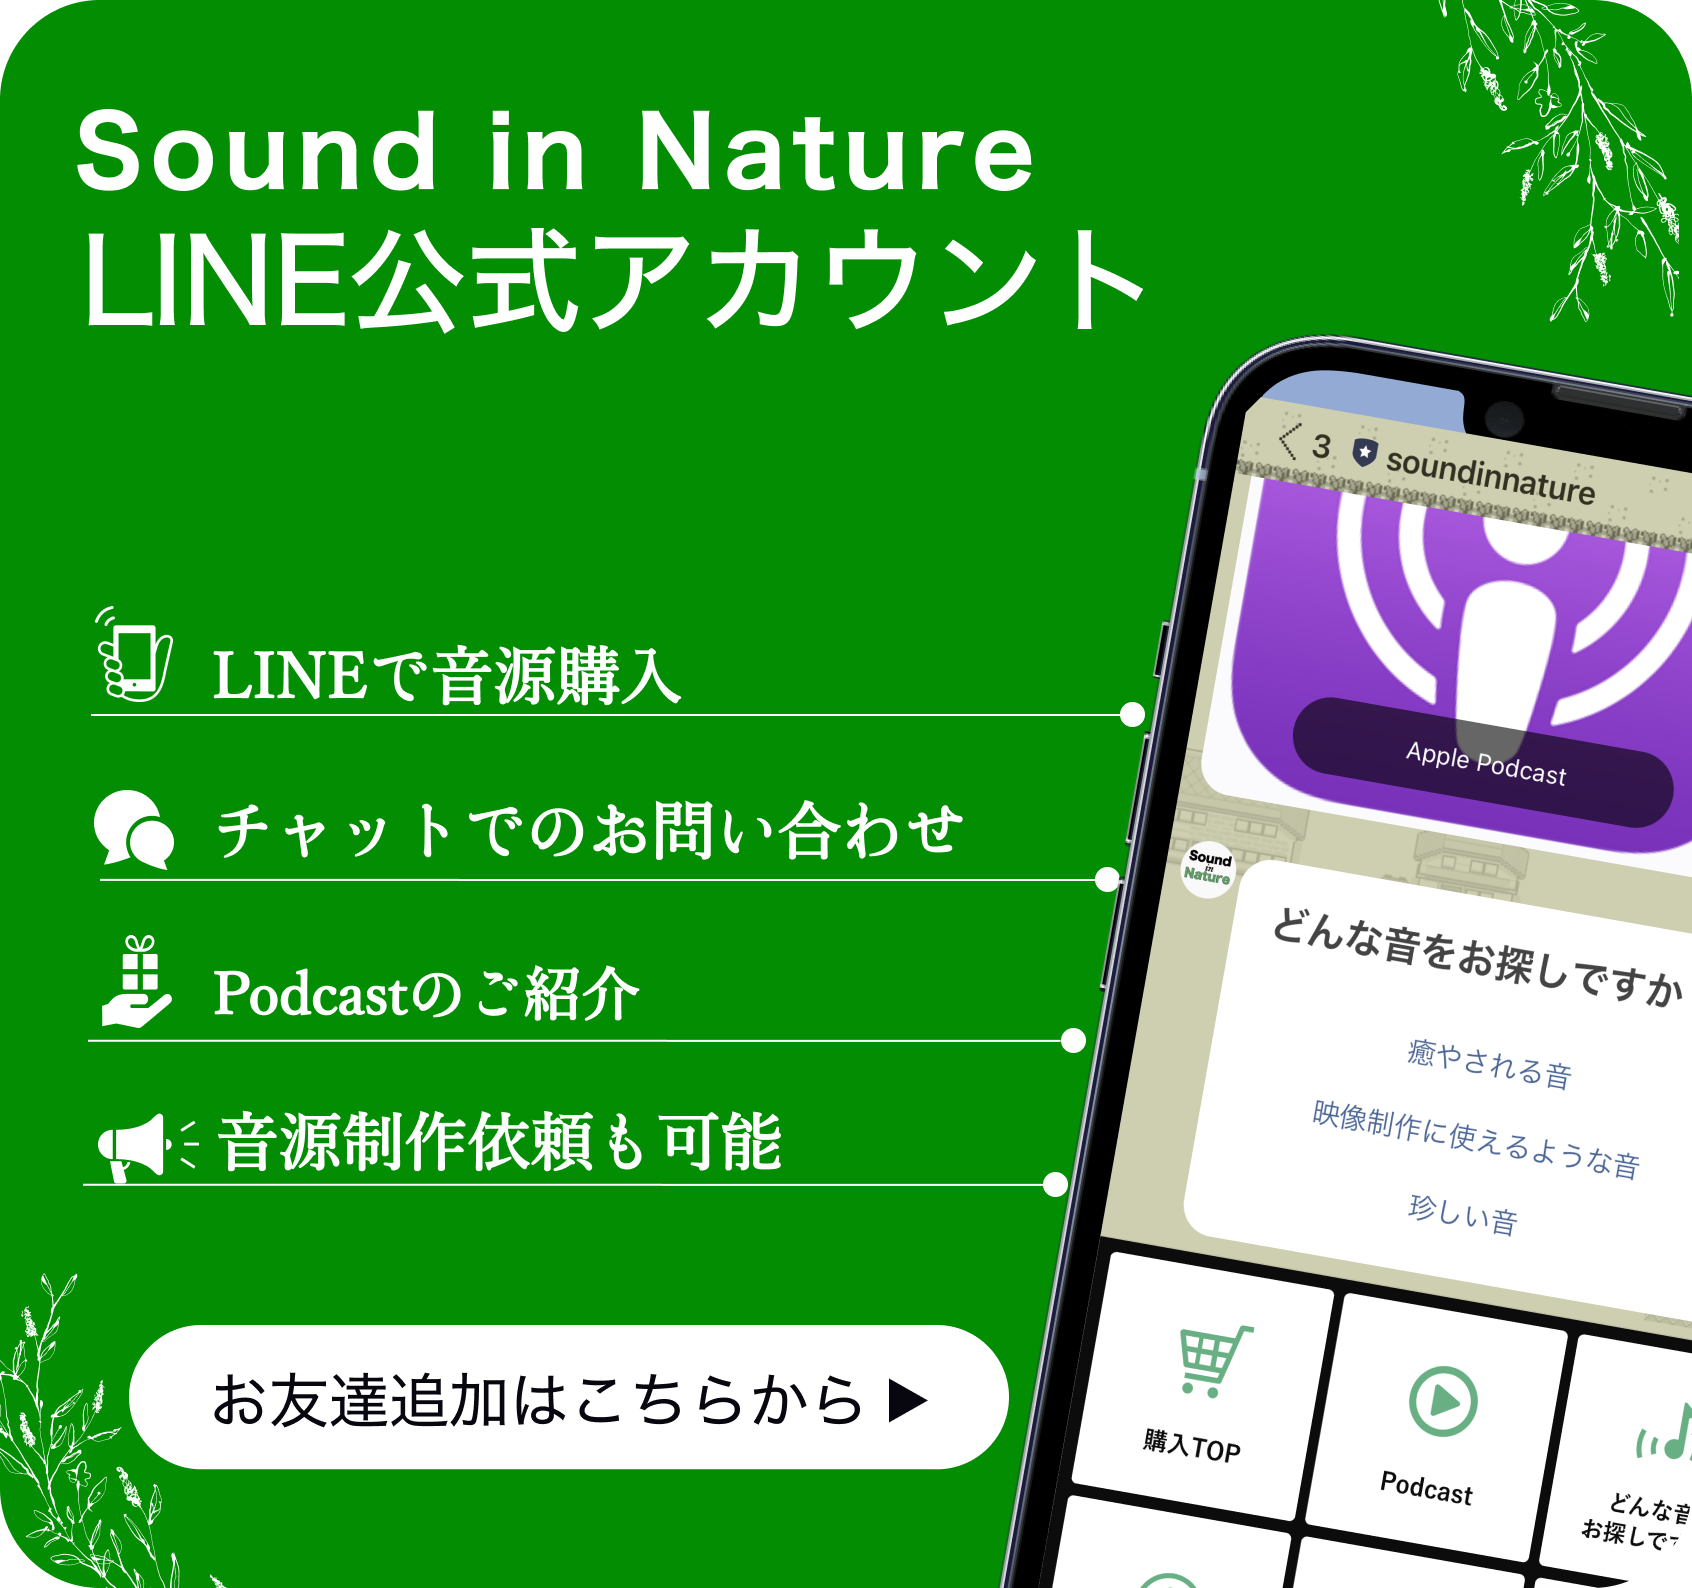 Sound in nature LINE 